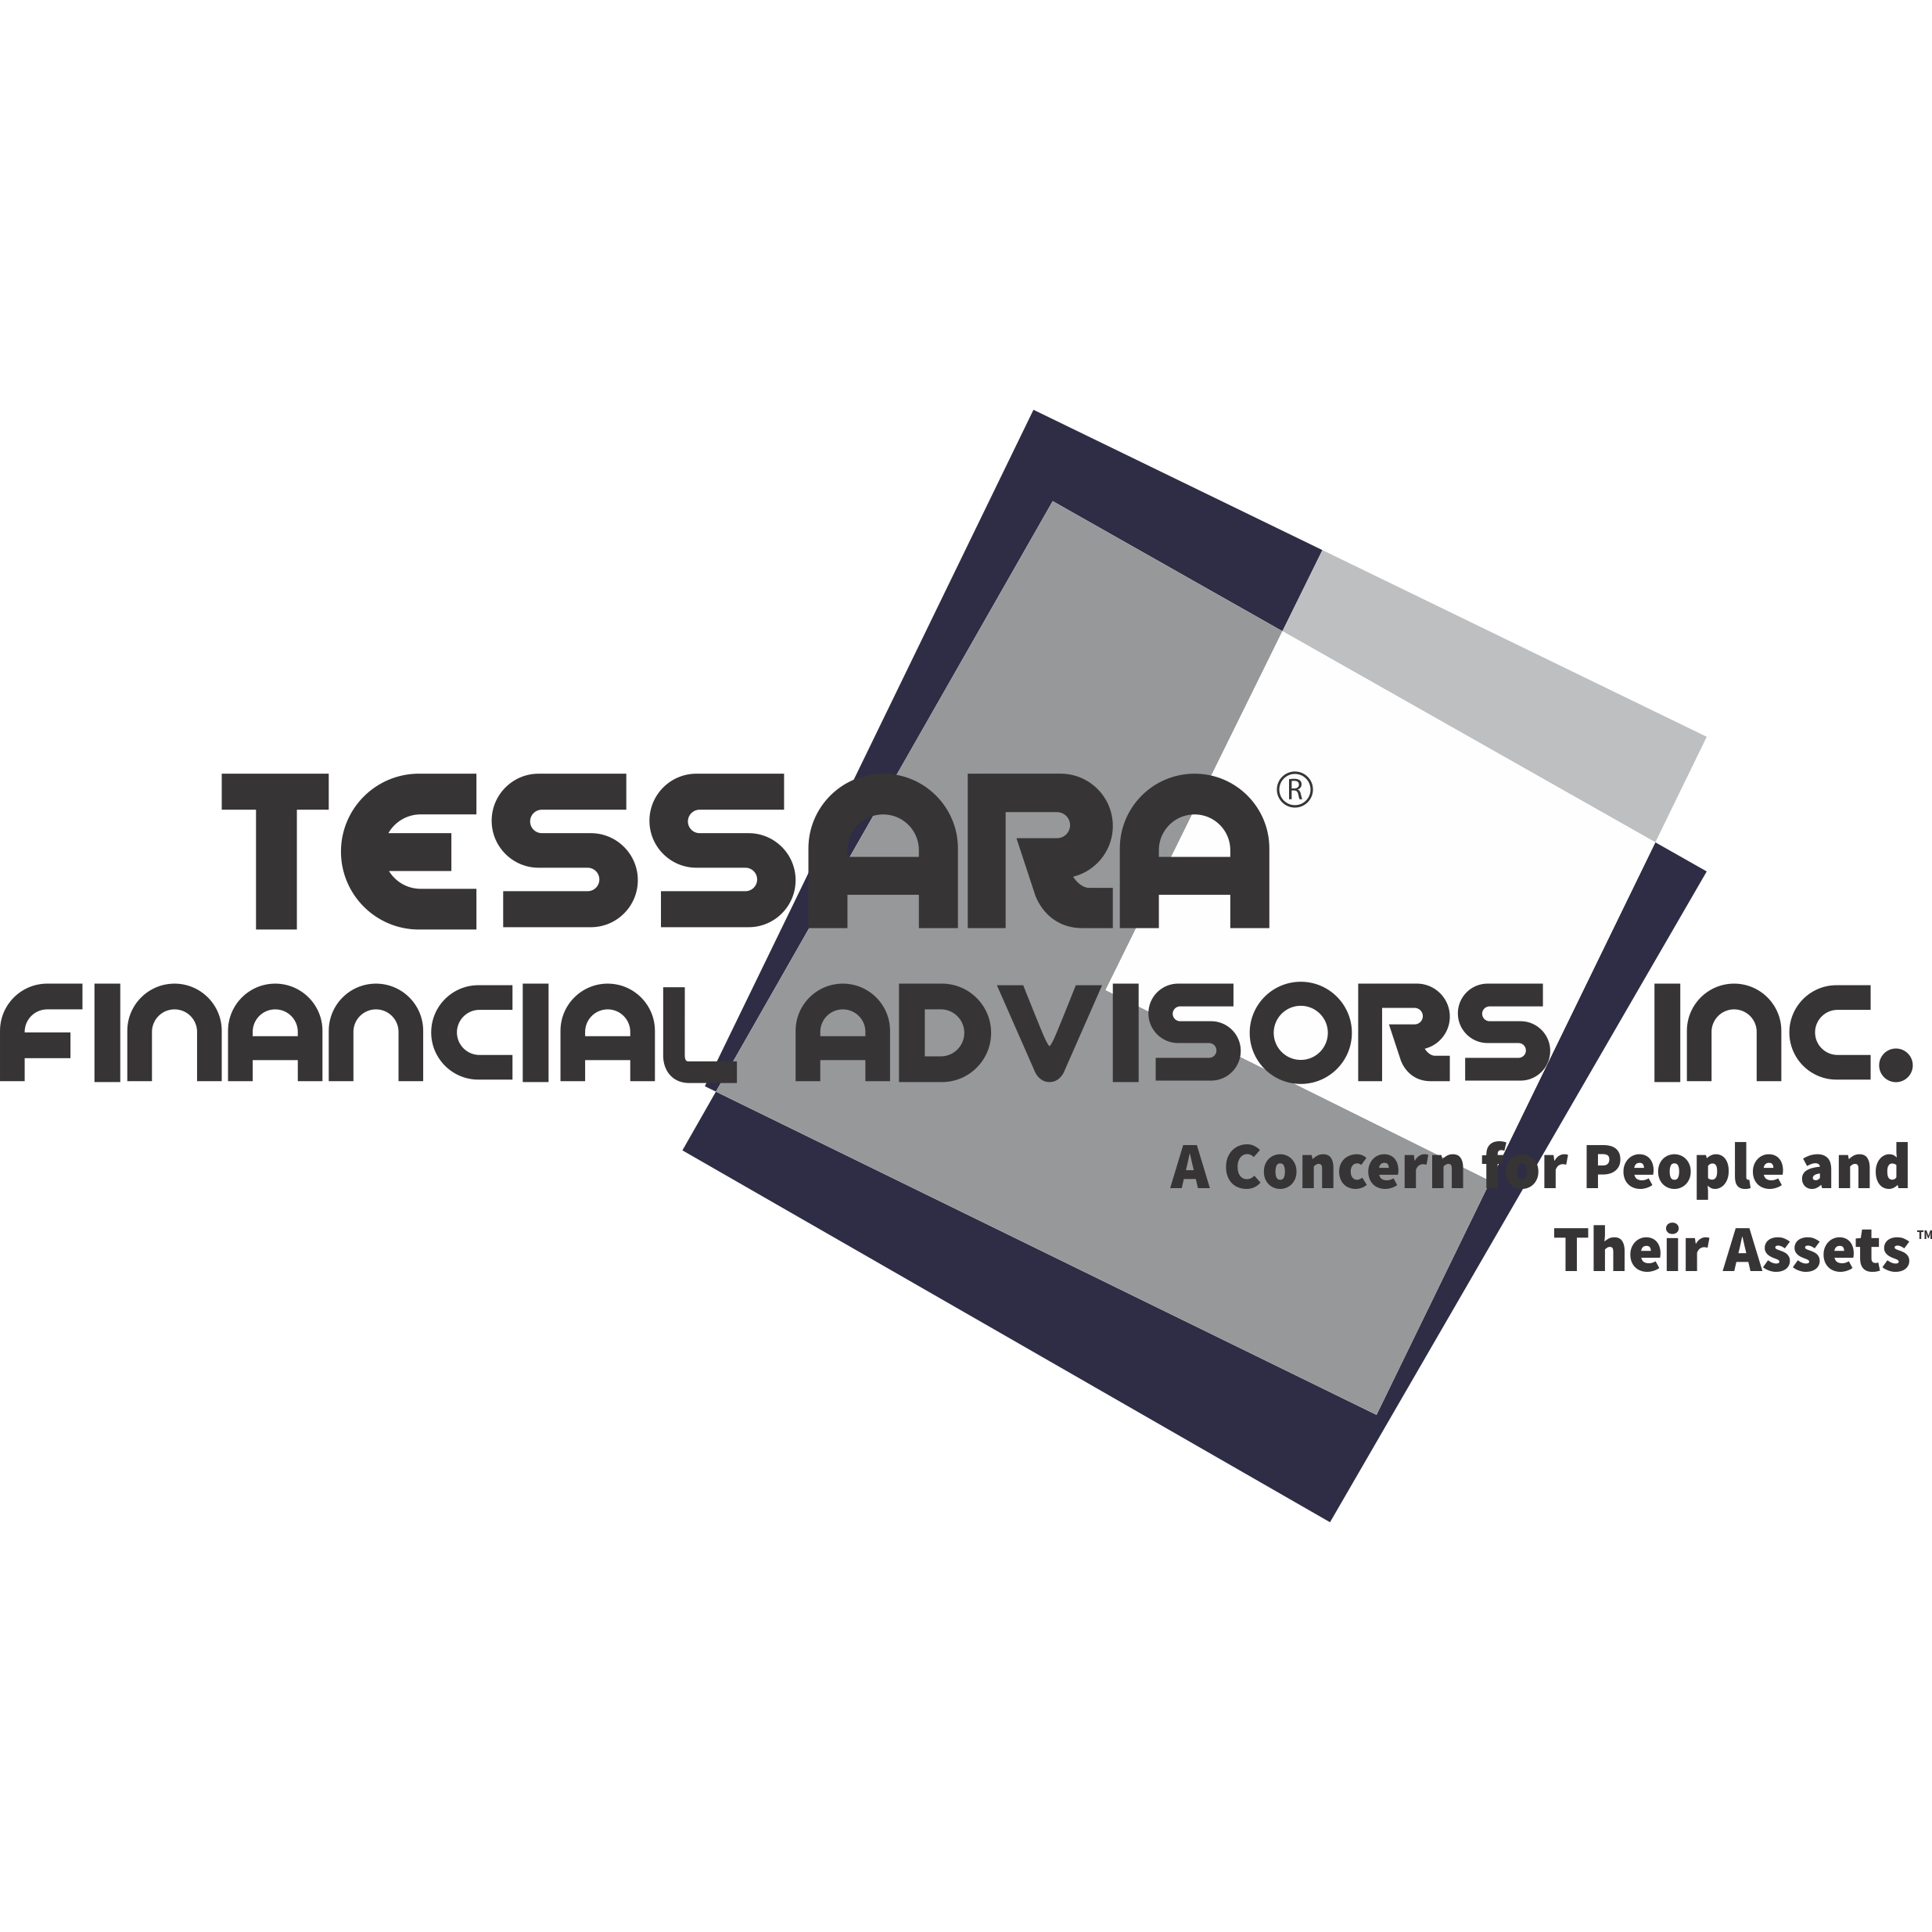 Tessara Financial Advisors, Inc. Photo